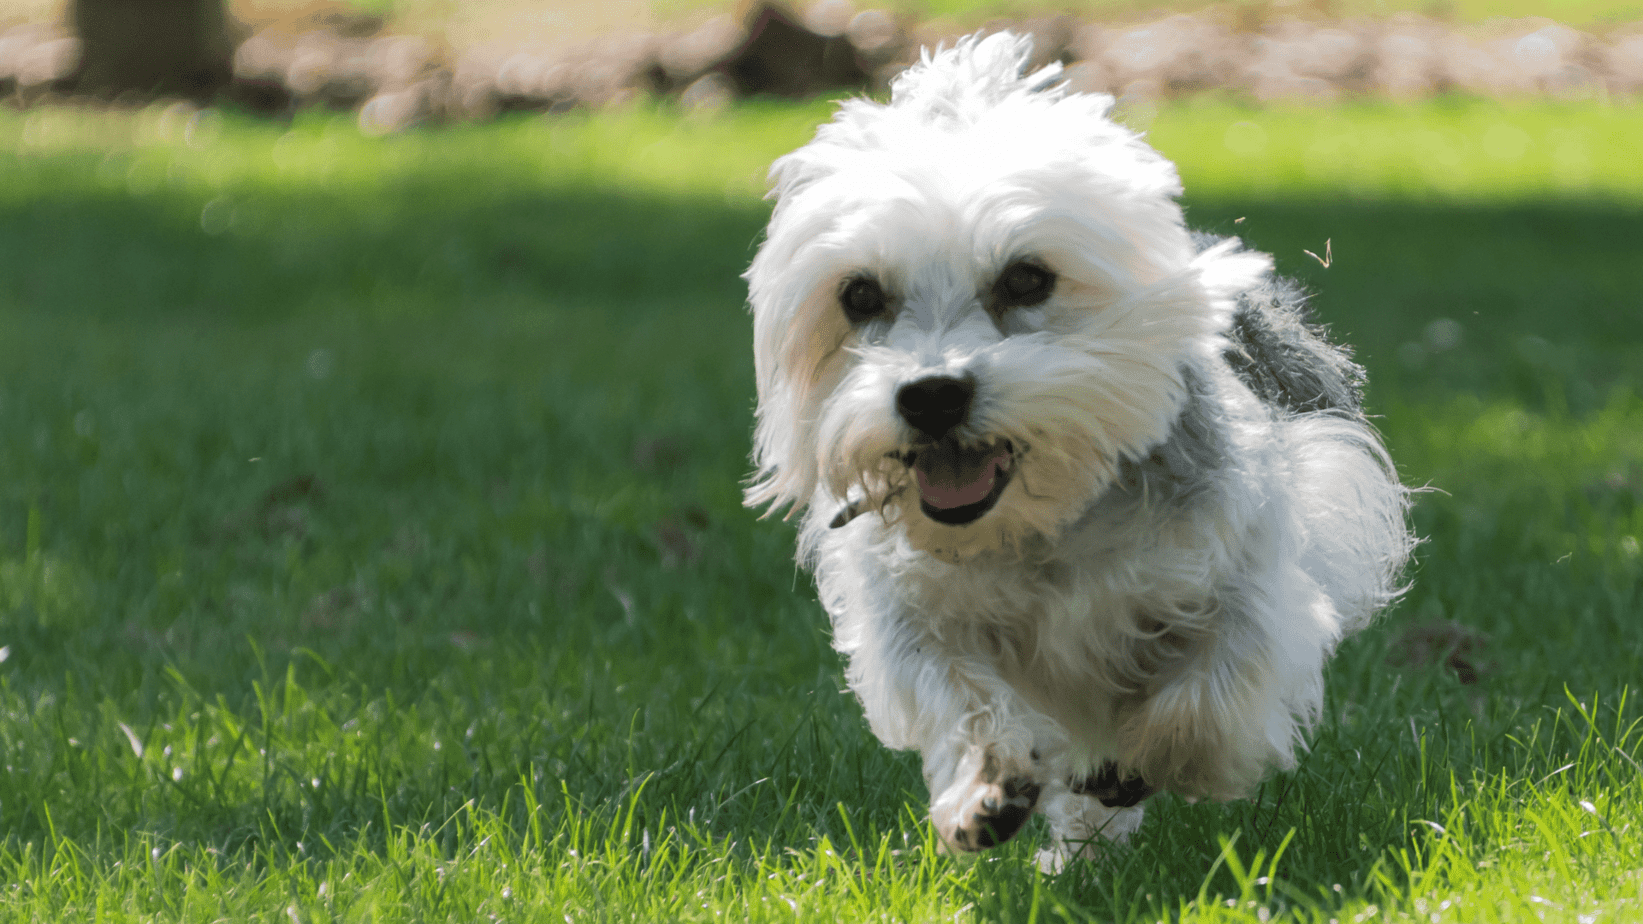 Dandie Dinmont Terrier running